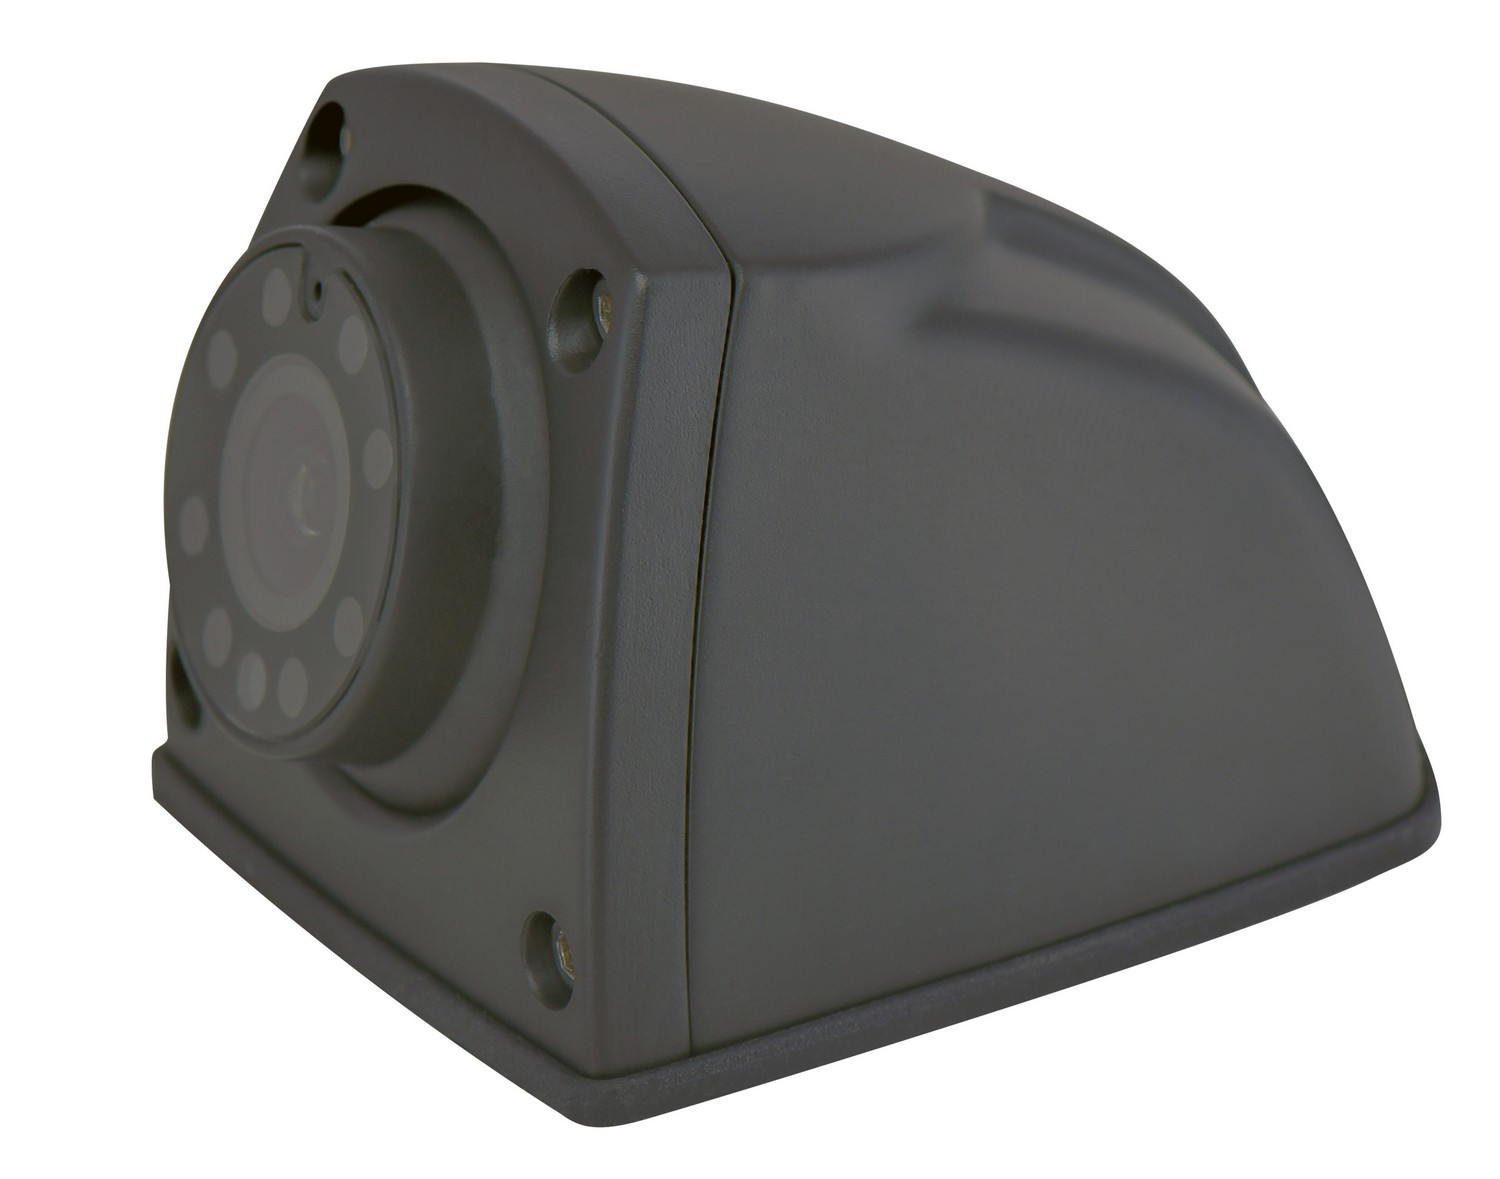 compact full hd car camera with IR night vision